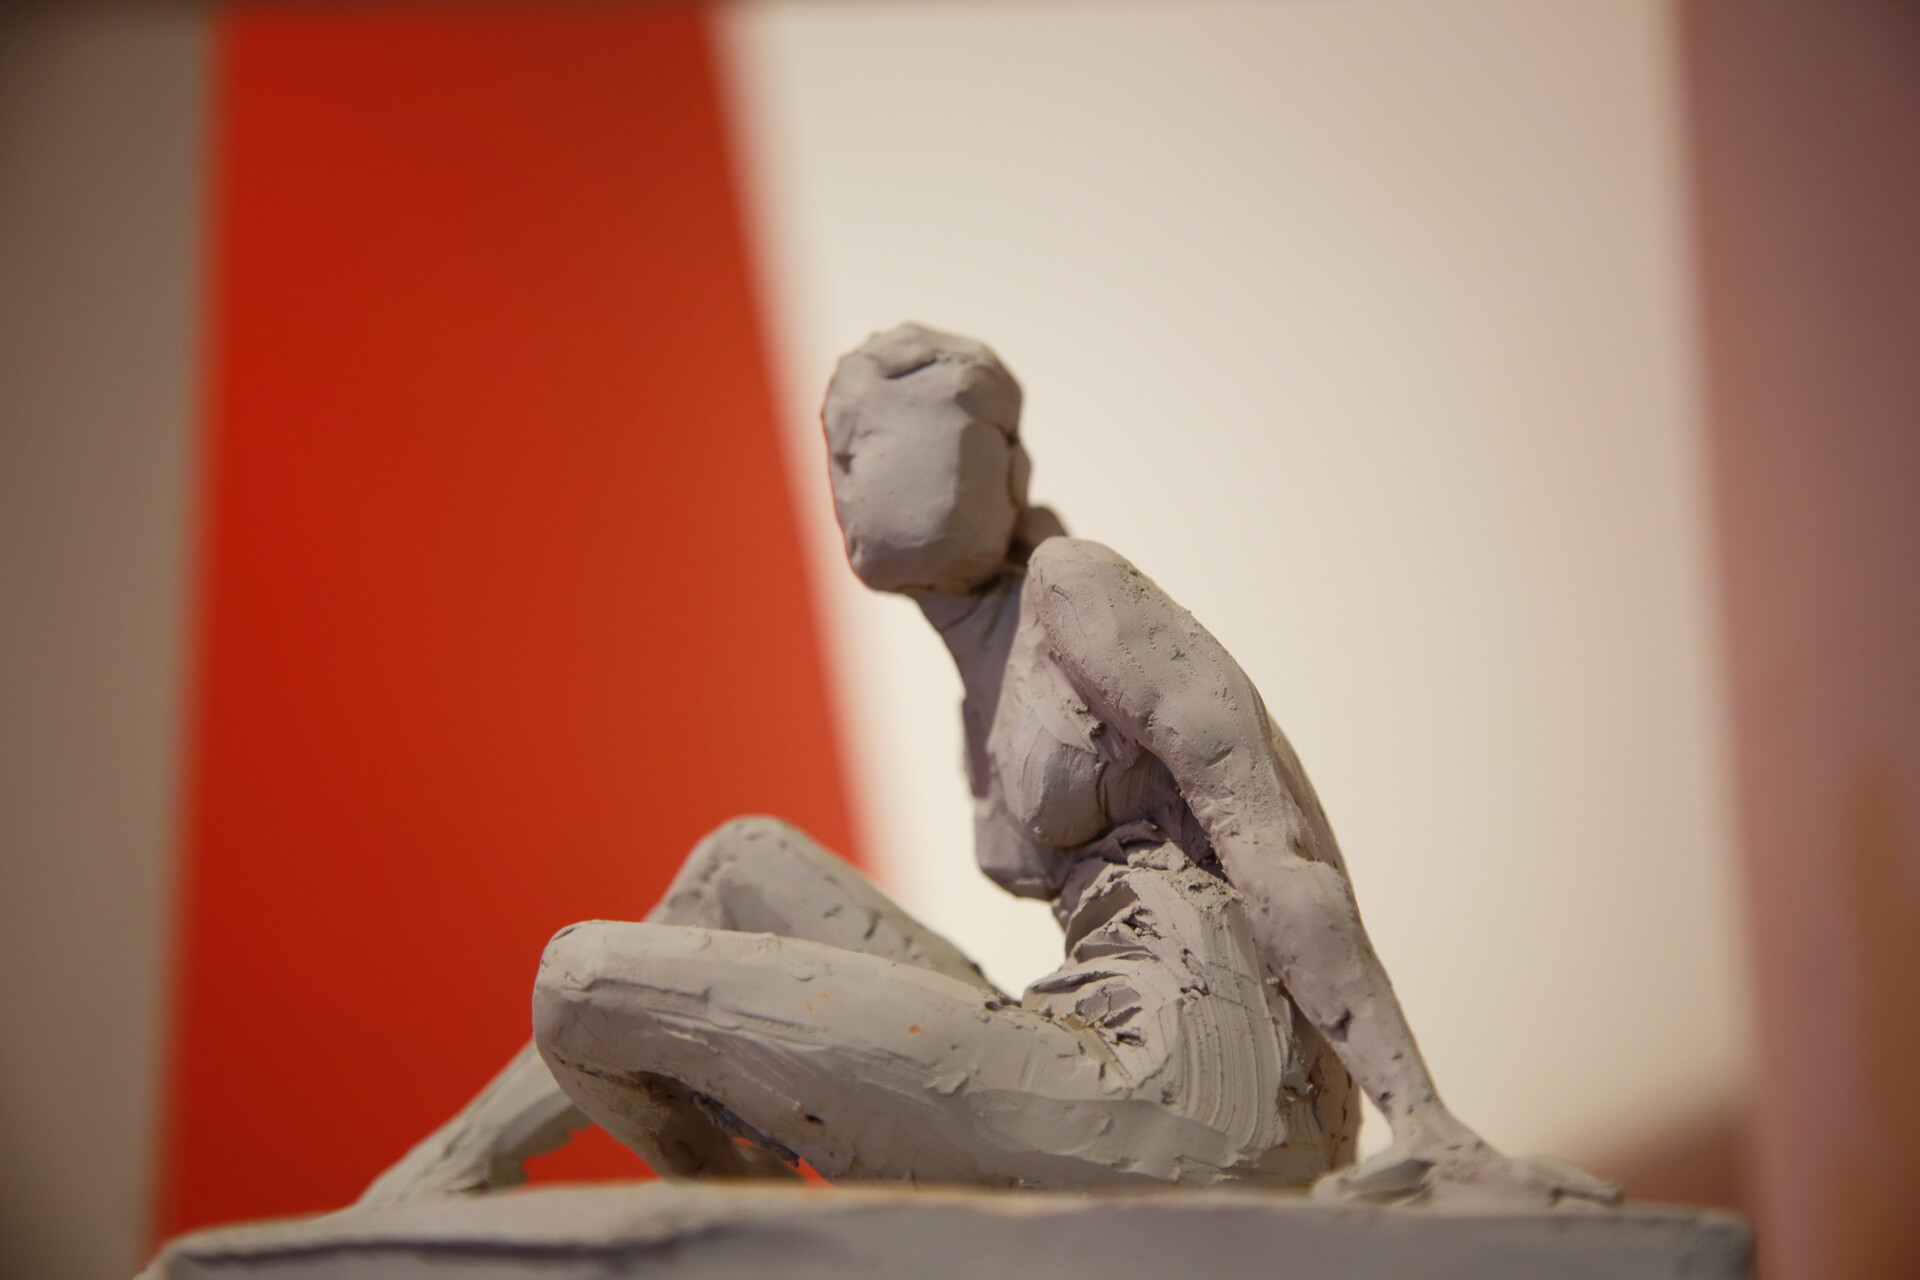 ArtStation - Figure clay sculpting